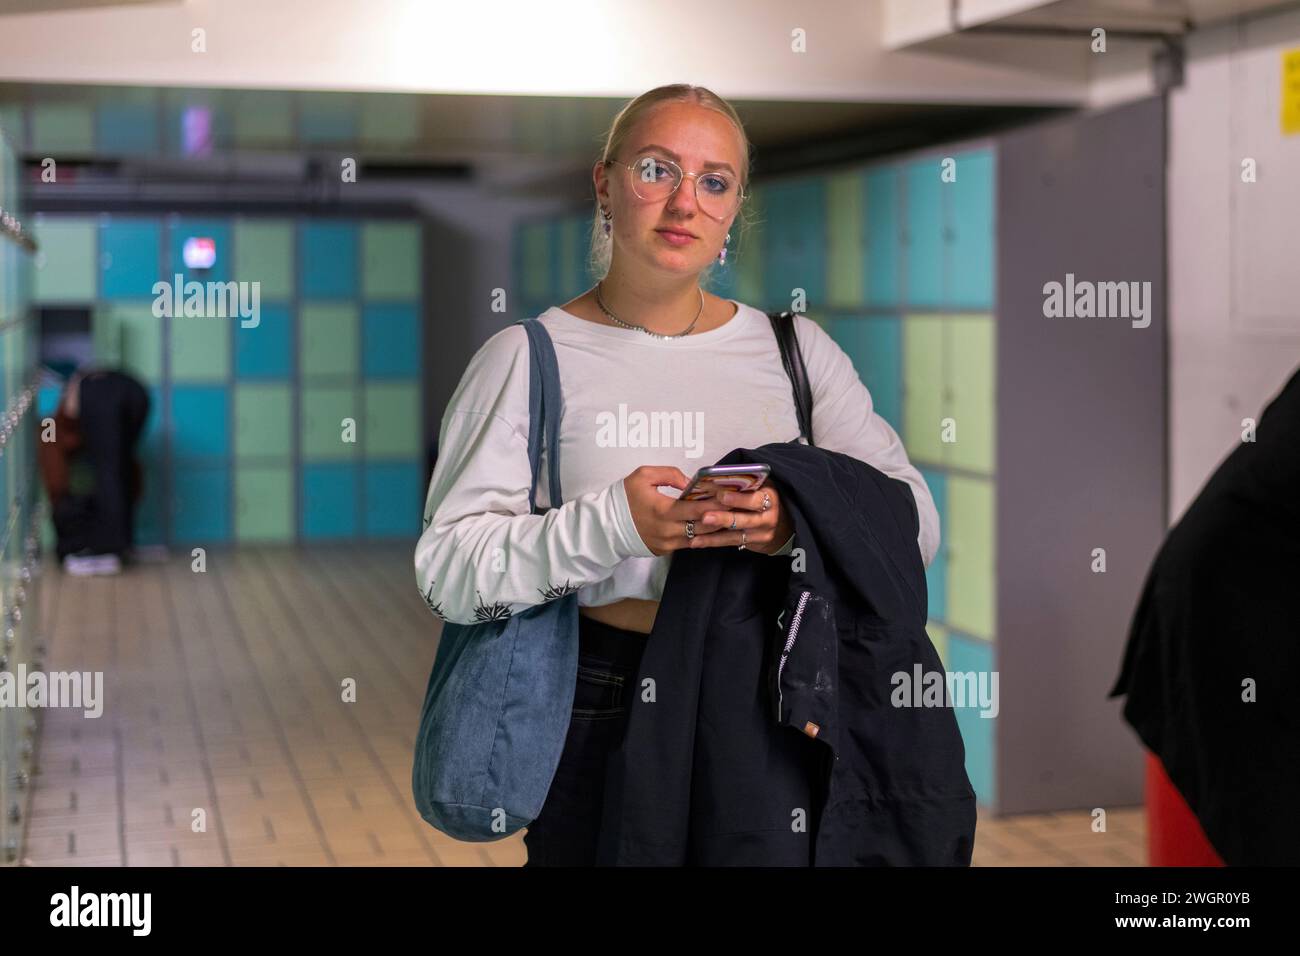 Teenage student on her phone at university Stock Photo